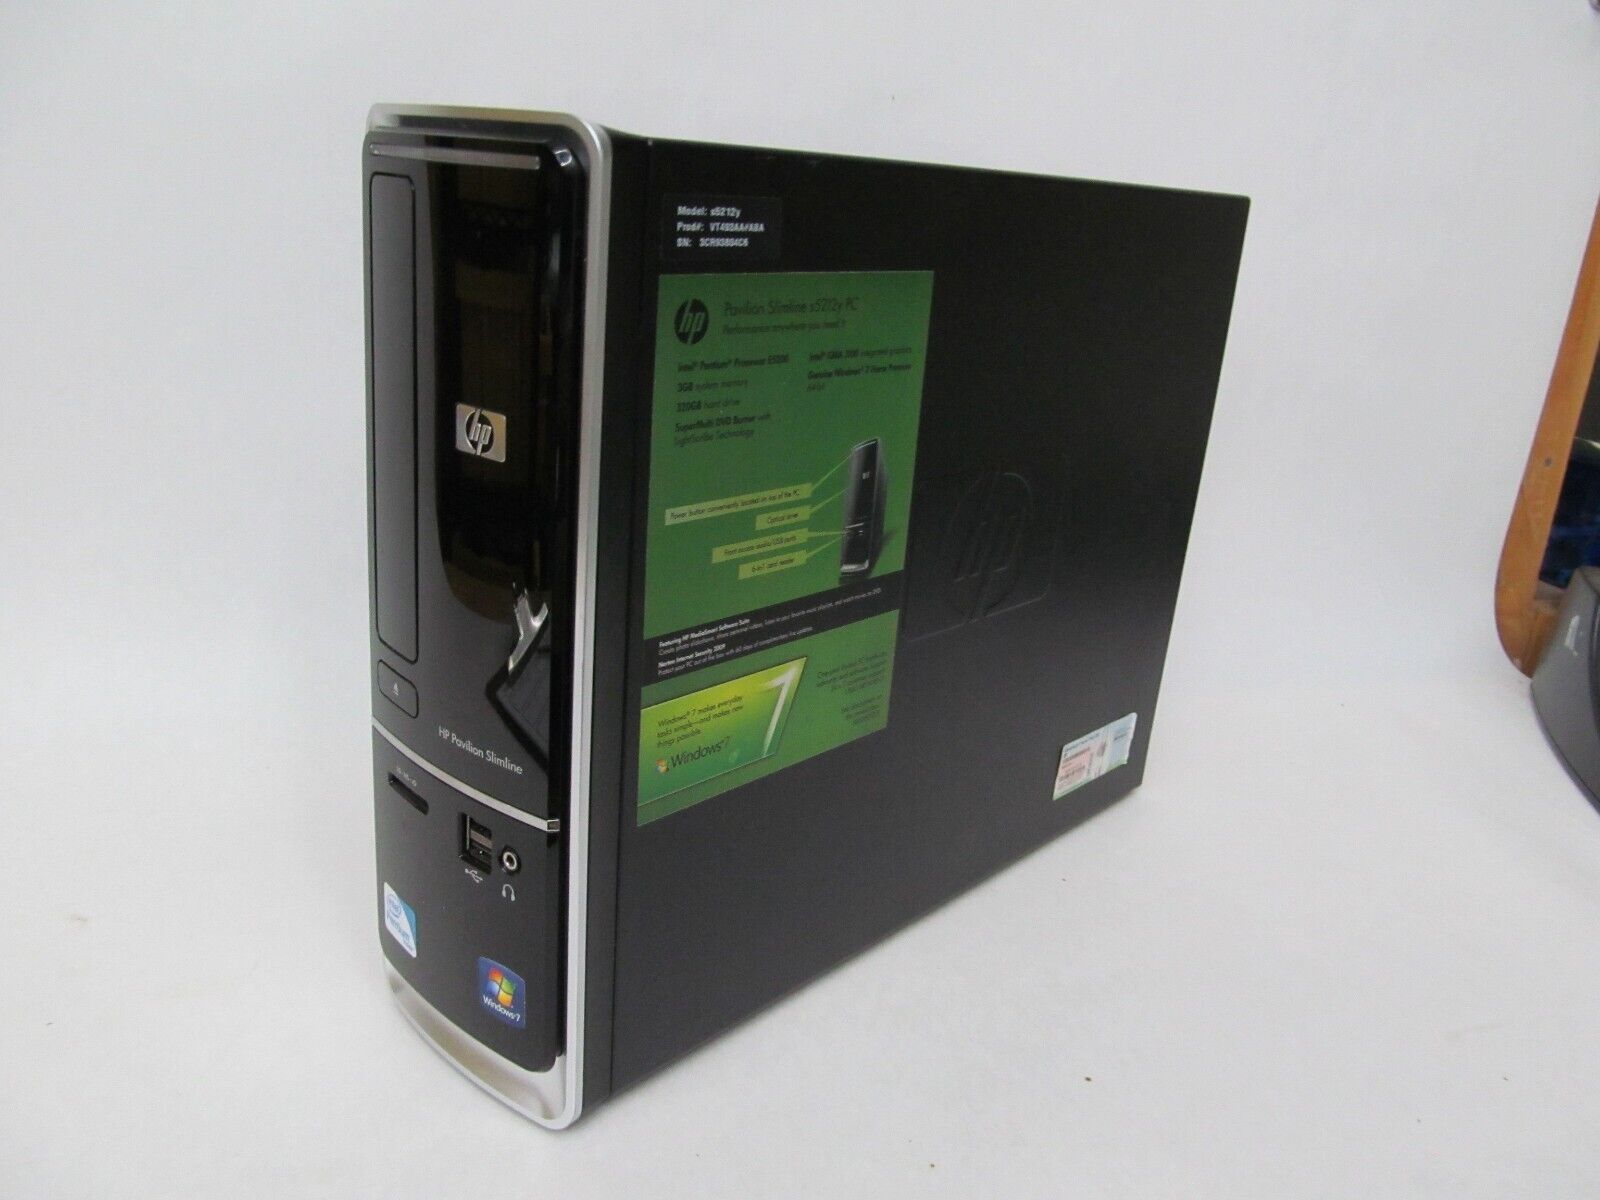 HP Pavilion s5212y Slimline Desktop Computer Tower PC w/ Windows 7